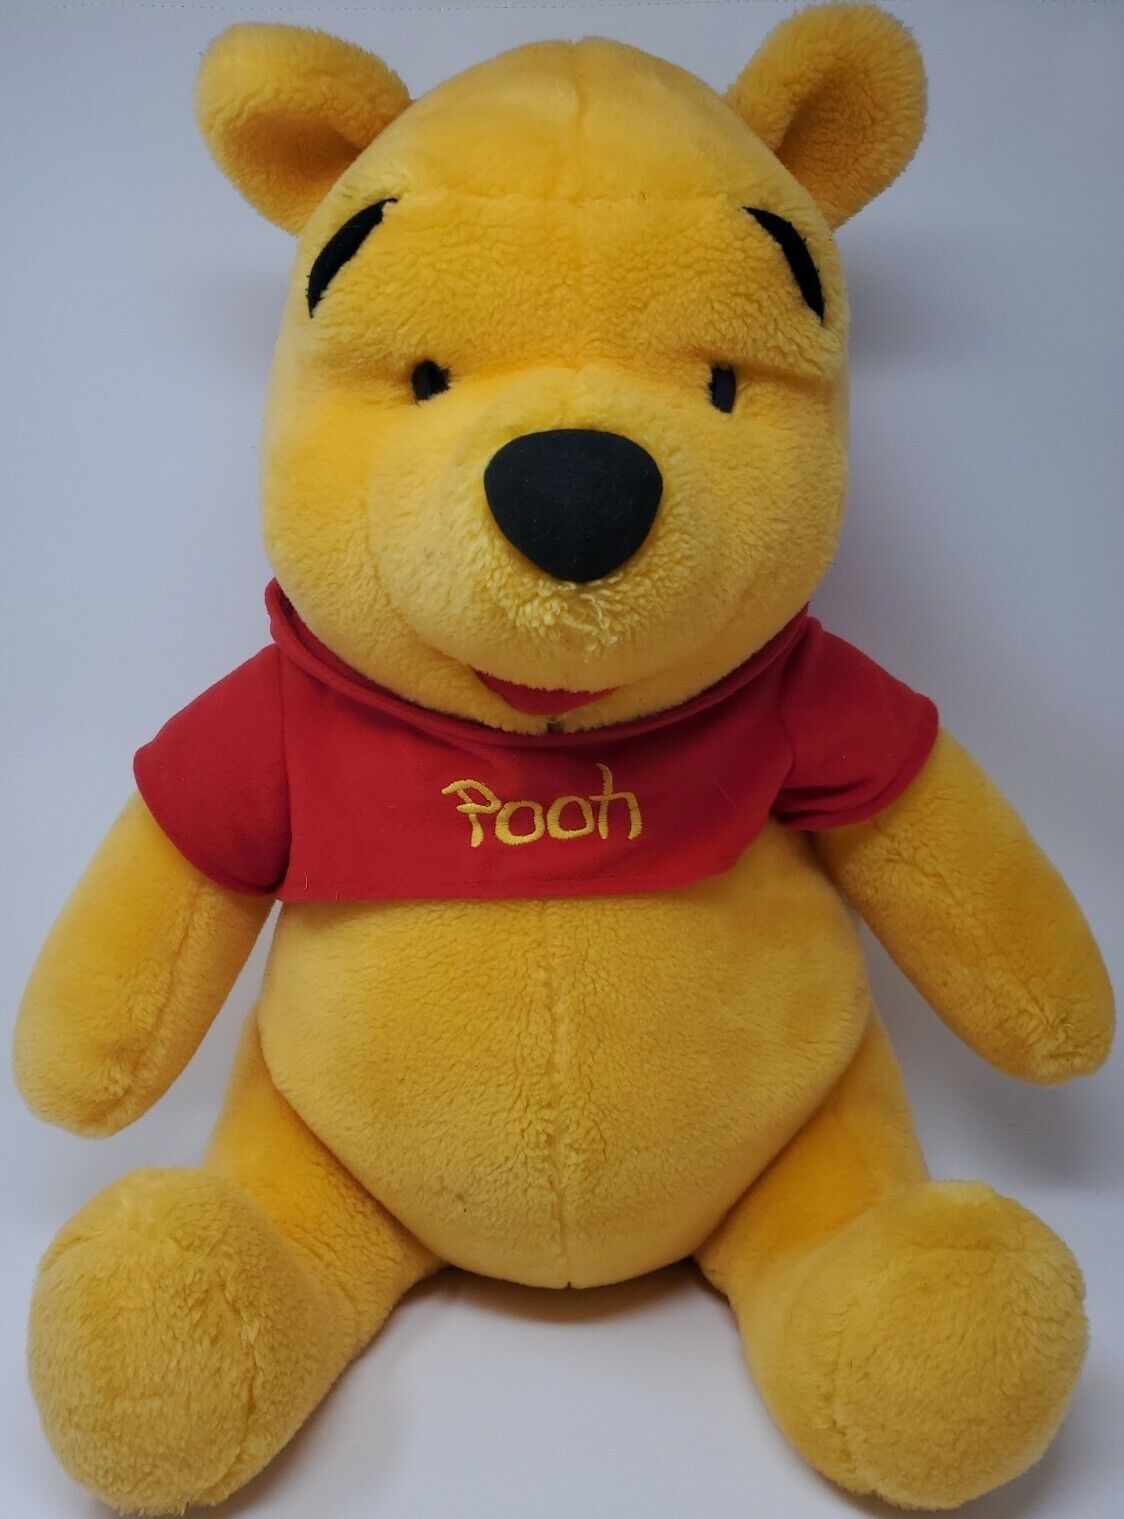 Winnie The Pooh Stuffed Animals: A Plush Journey to Imagination